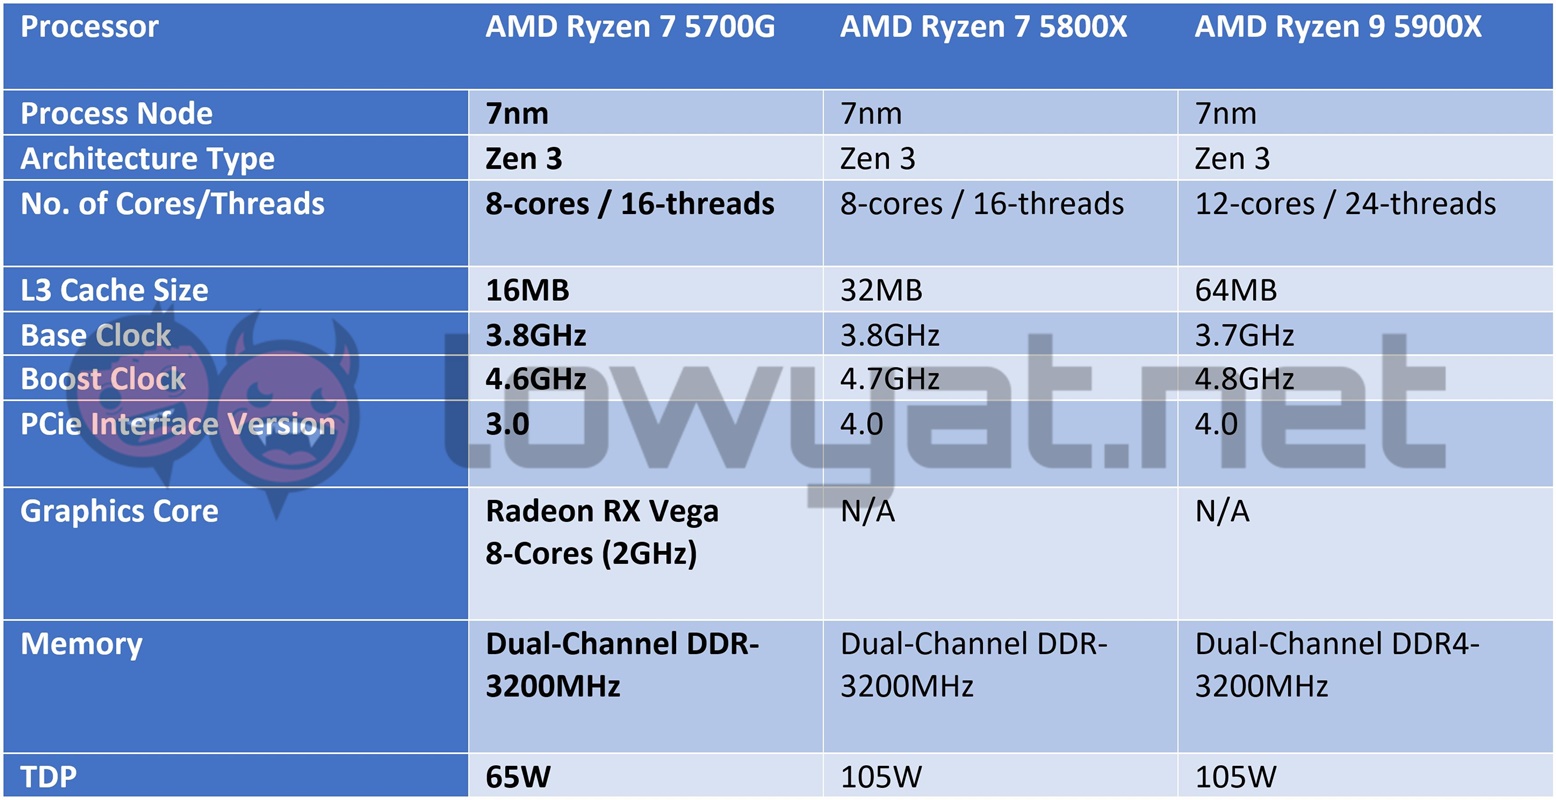 AMD Ryzen 7 5700G APU Review: Radeon GPU Inside